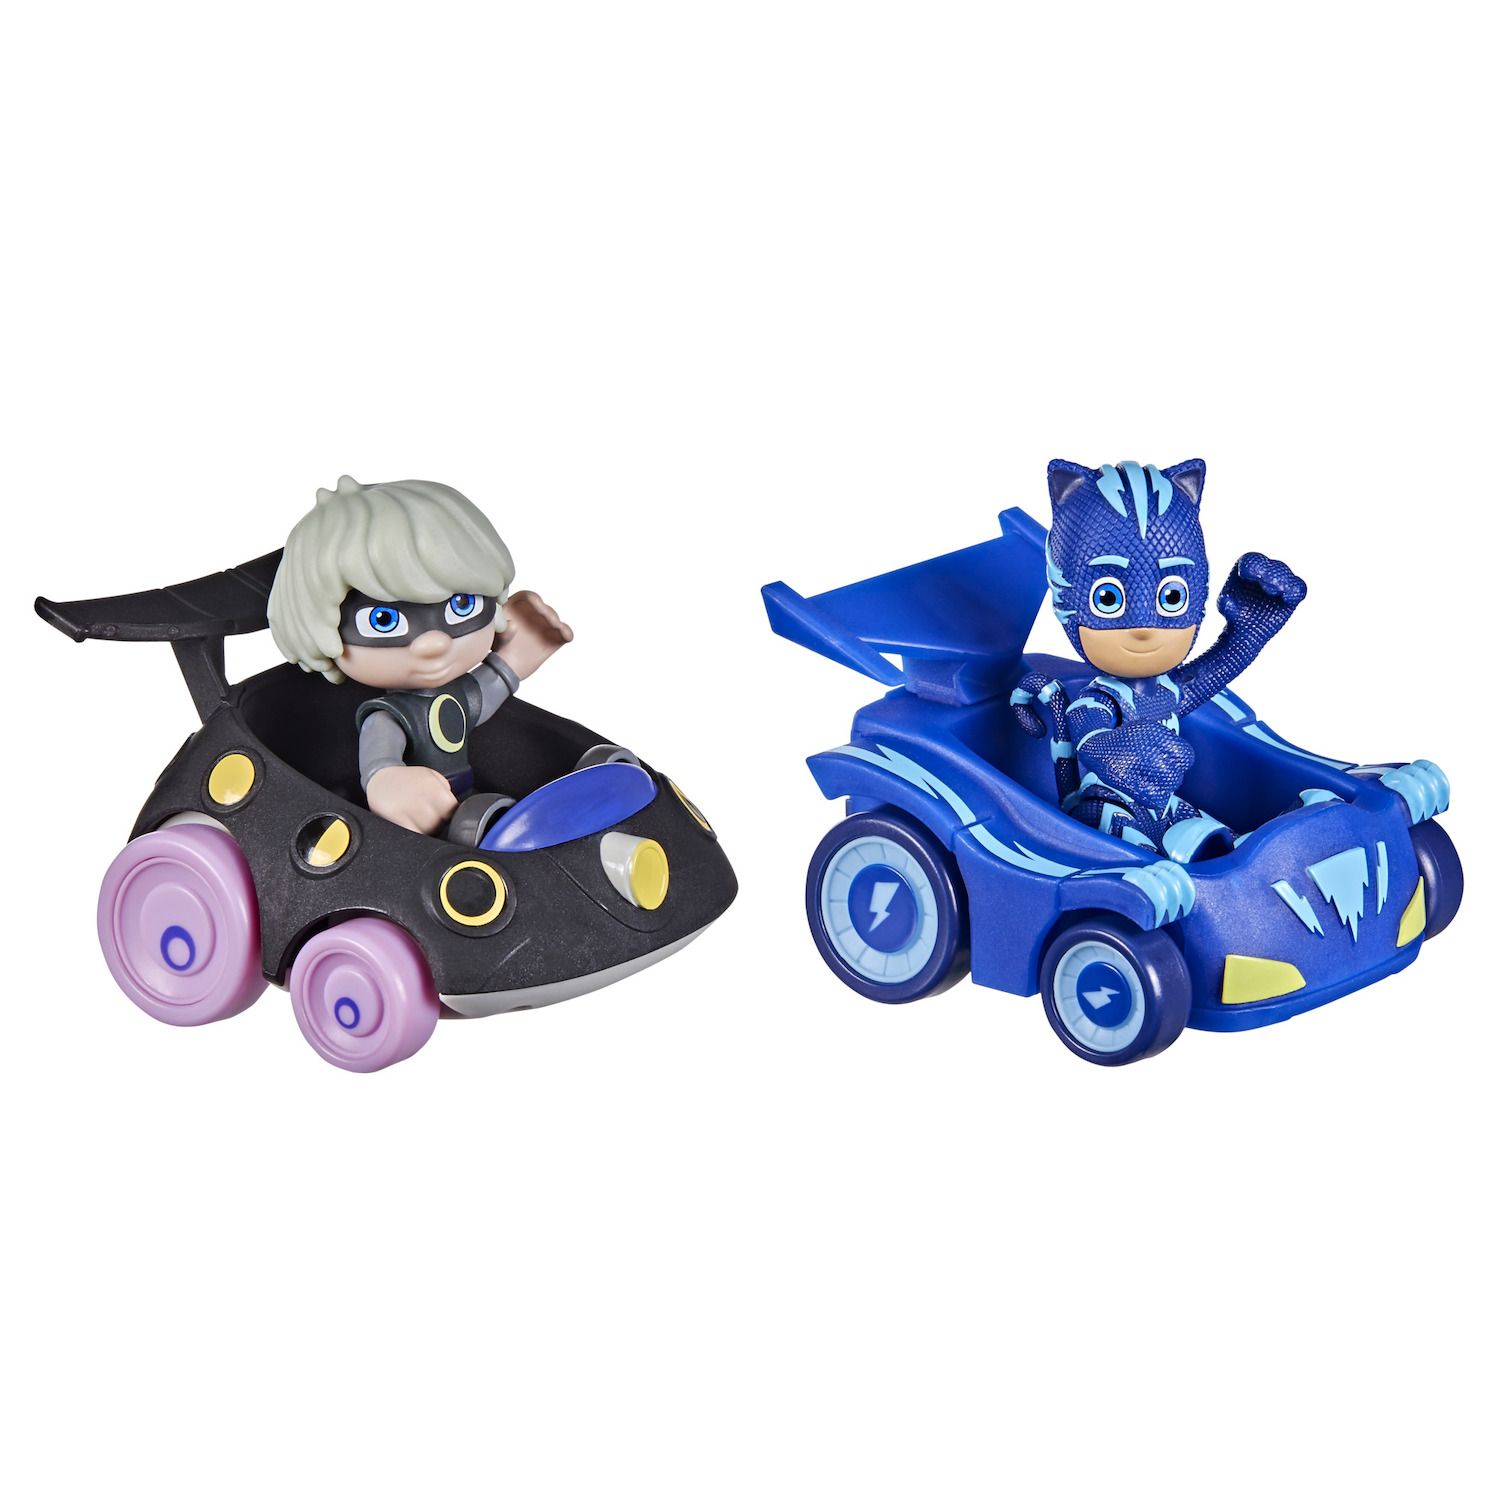 Image for Hasbro PJ Masks Catboy vs Luna Girl Action Figures and Vehicles Set by at Kohl's.